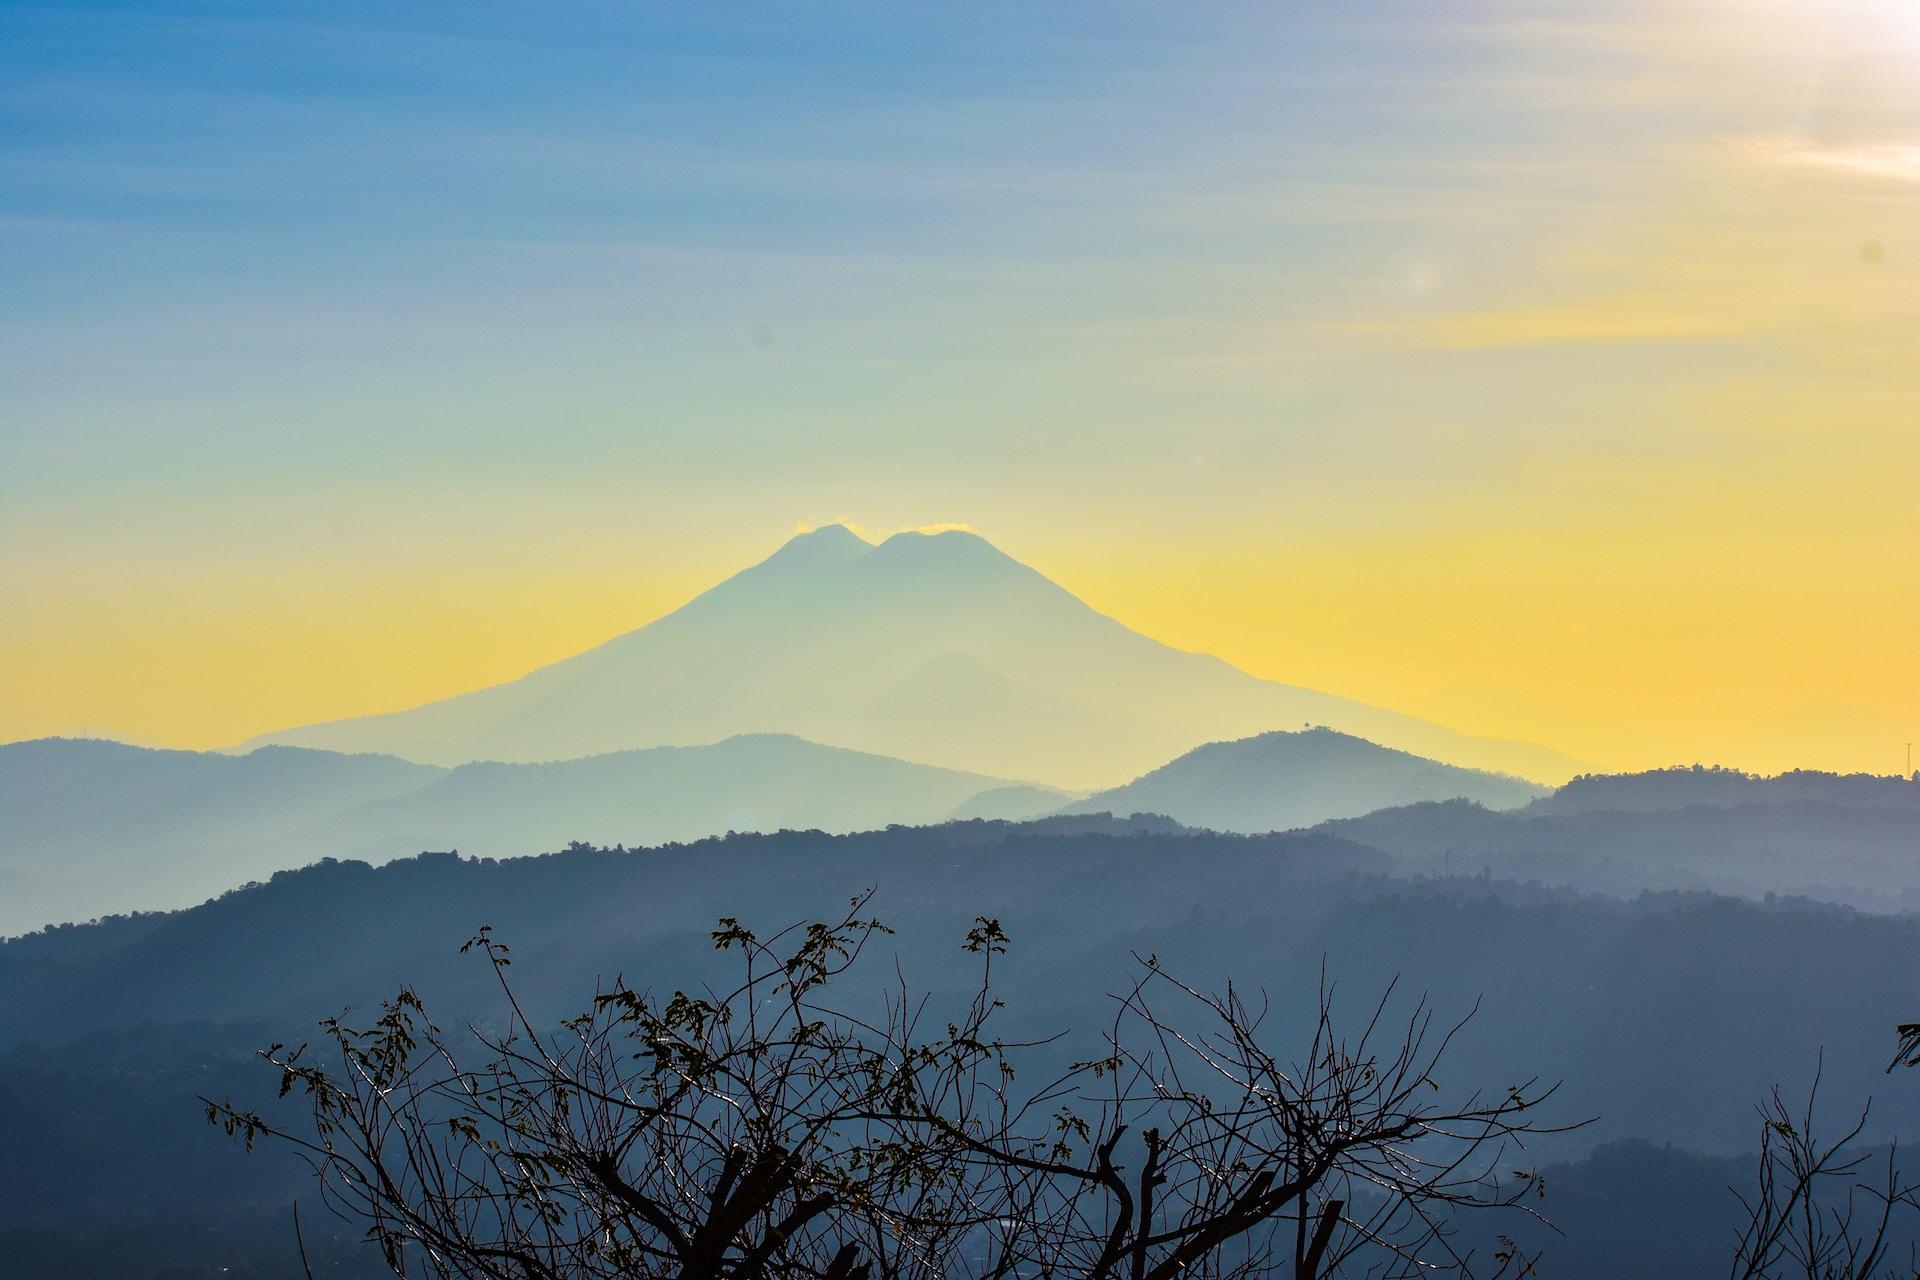 El Salvador: the outline of a volcano against a blue-yellow sky